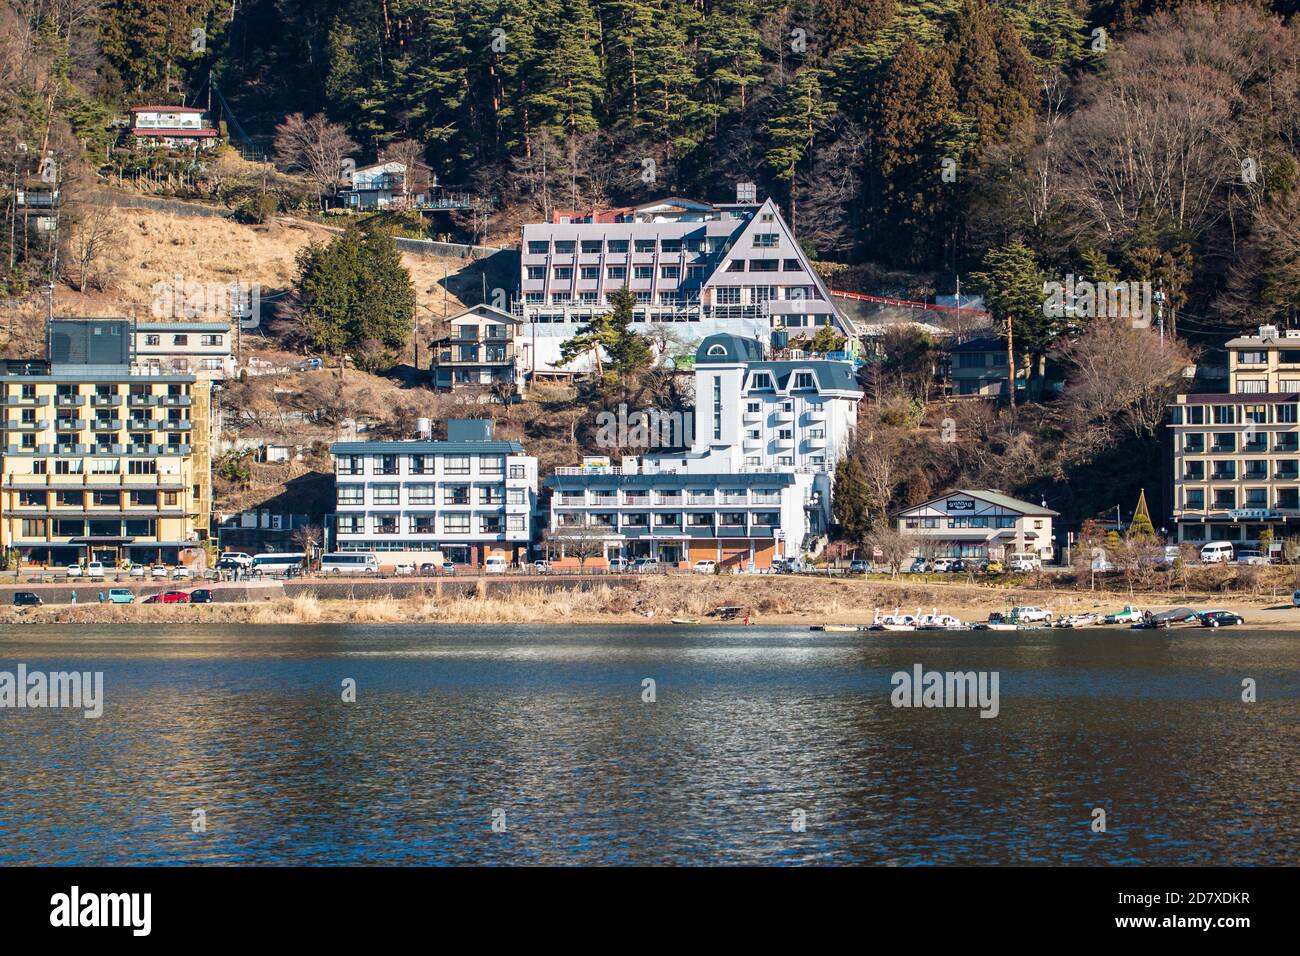 Hotels and accommodation situated right in front of the beautiful Lake Kawaguchi in Fujikawaguchiko Stock Photo